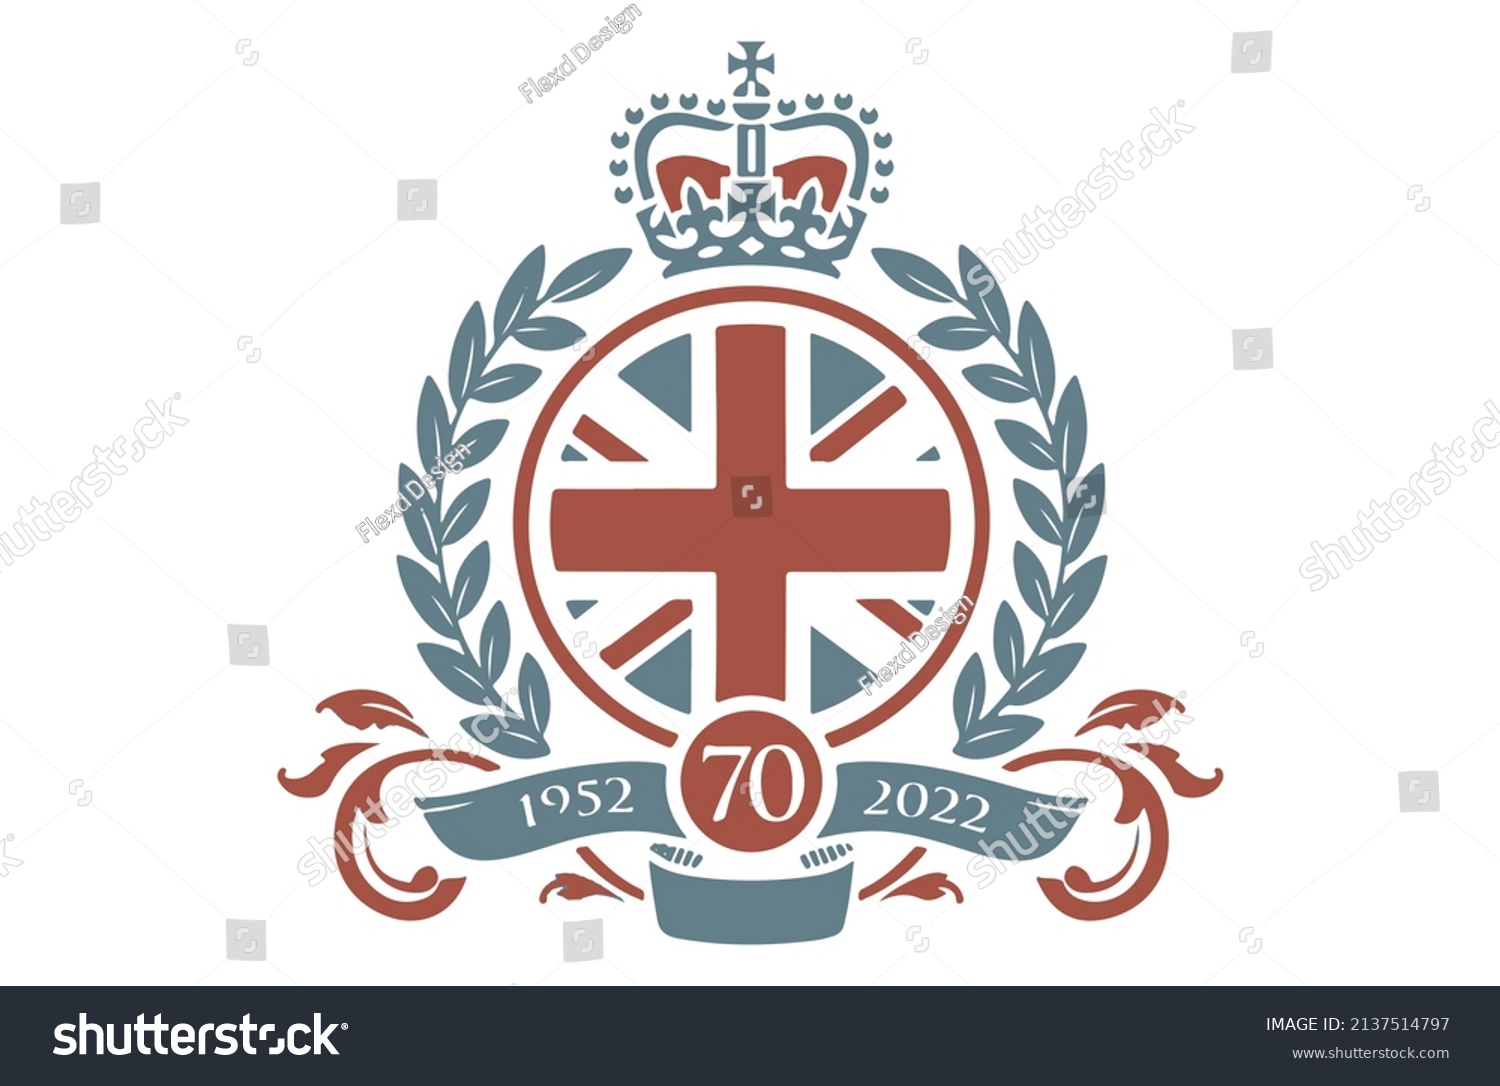 SVG of The Queen's Platinum Jubilee celebration svg